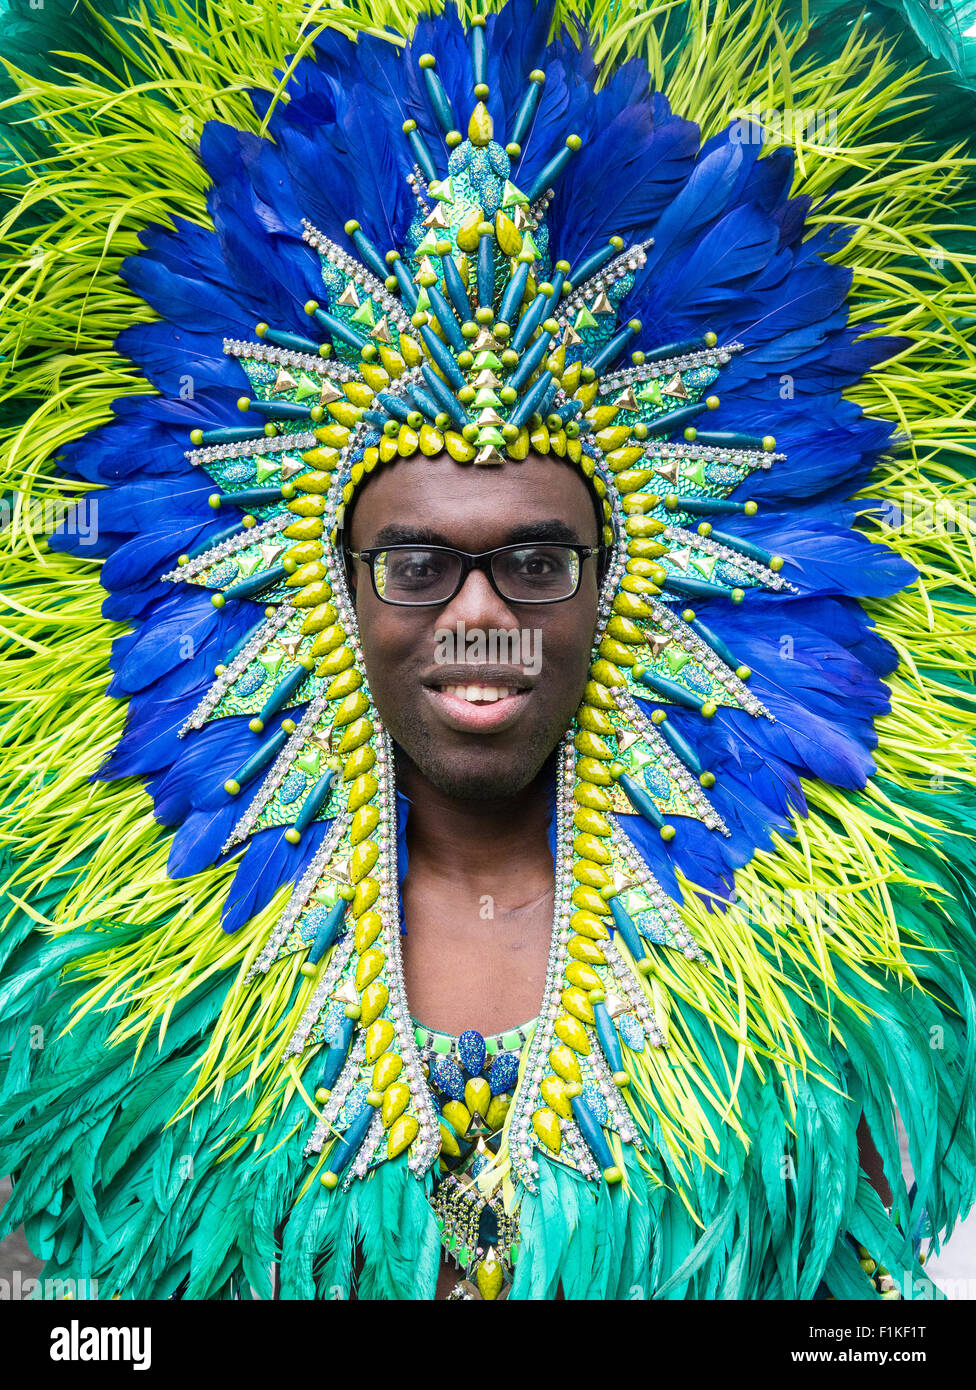 Feier am Notting Hill Carnival-The größte Straßenfest in Europa.  Karibischer Kultur mit bunten Kostümen Stockfoto